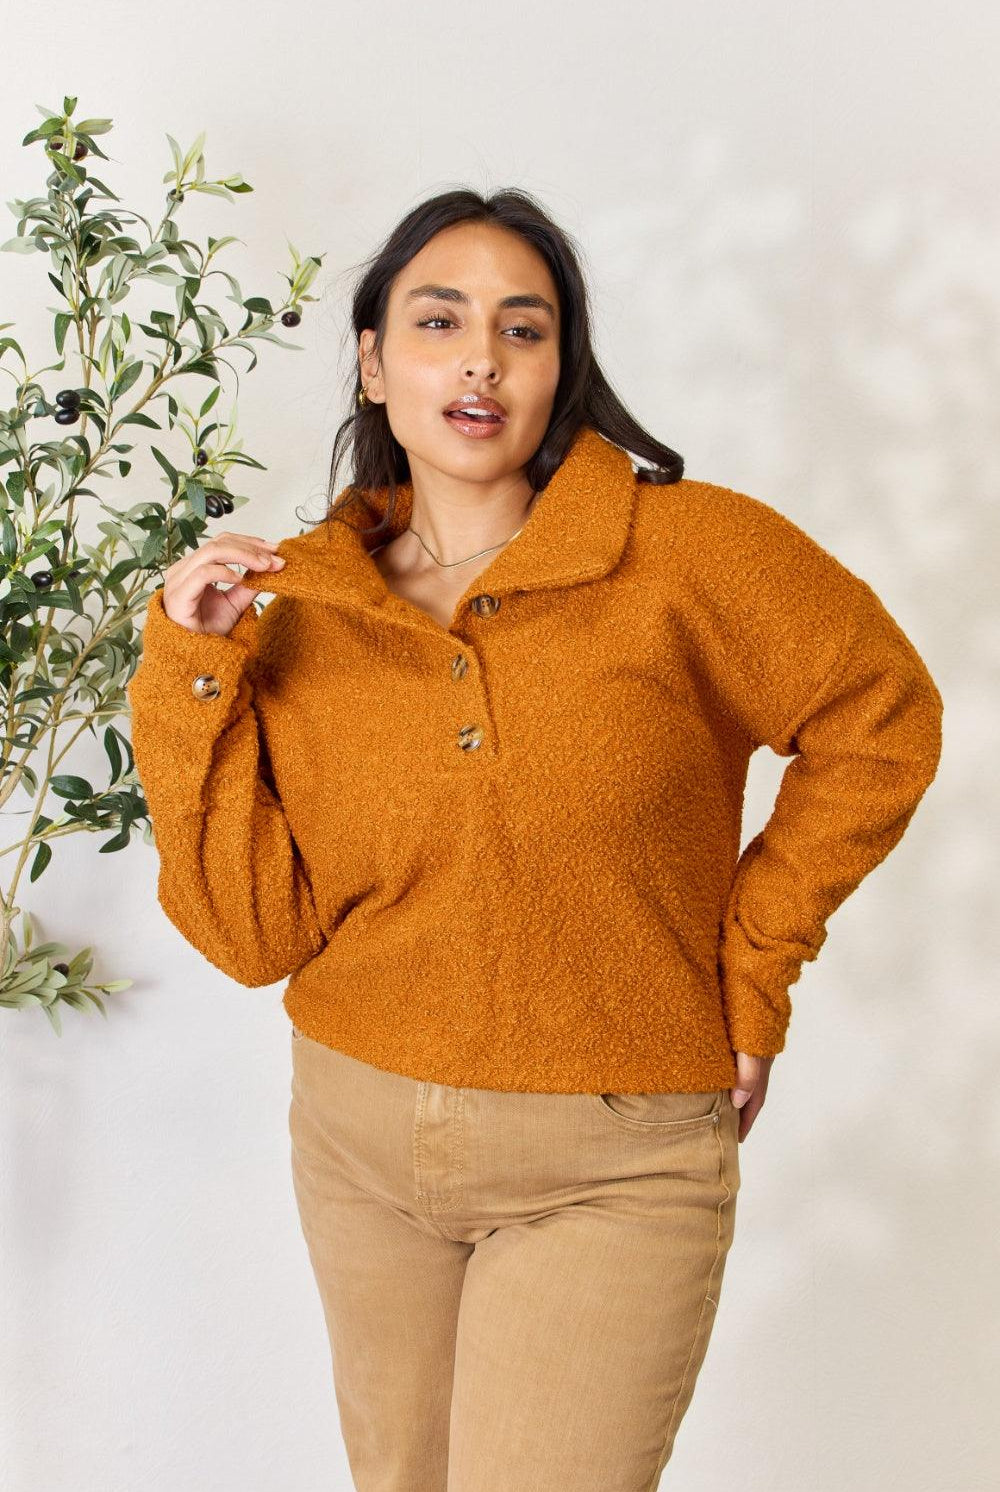 Women's Shirts Culture Code Full Size Half Button Turtleneck Sweatshirt